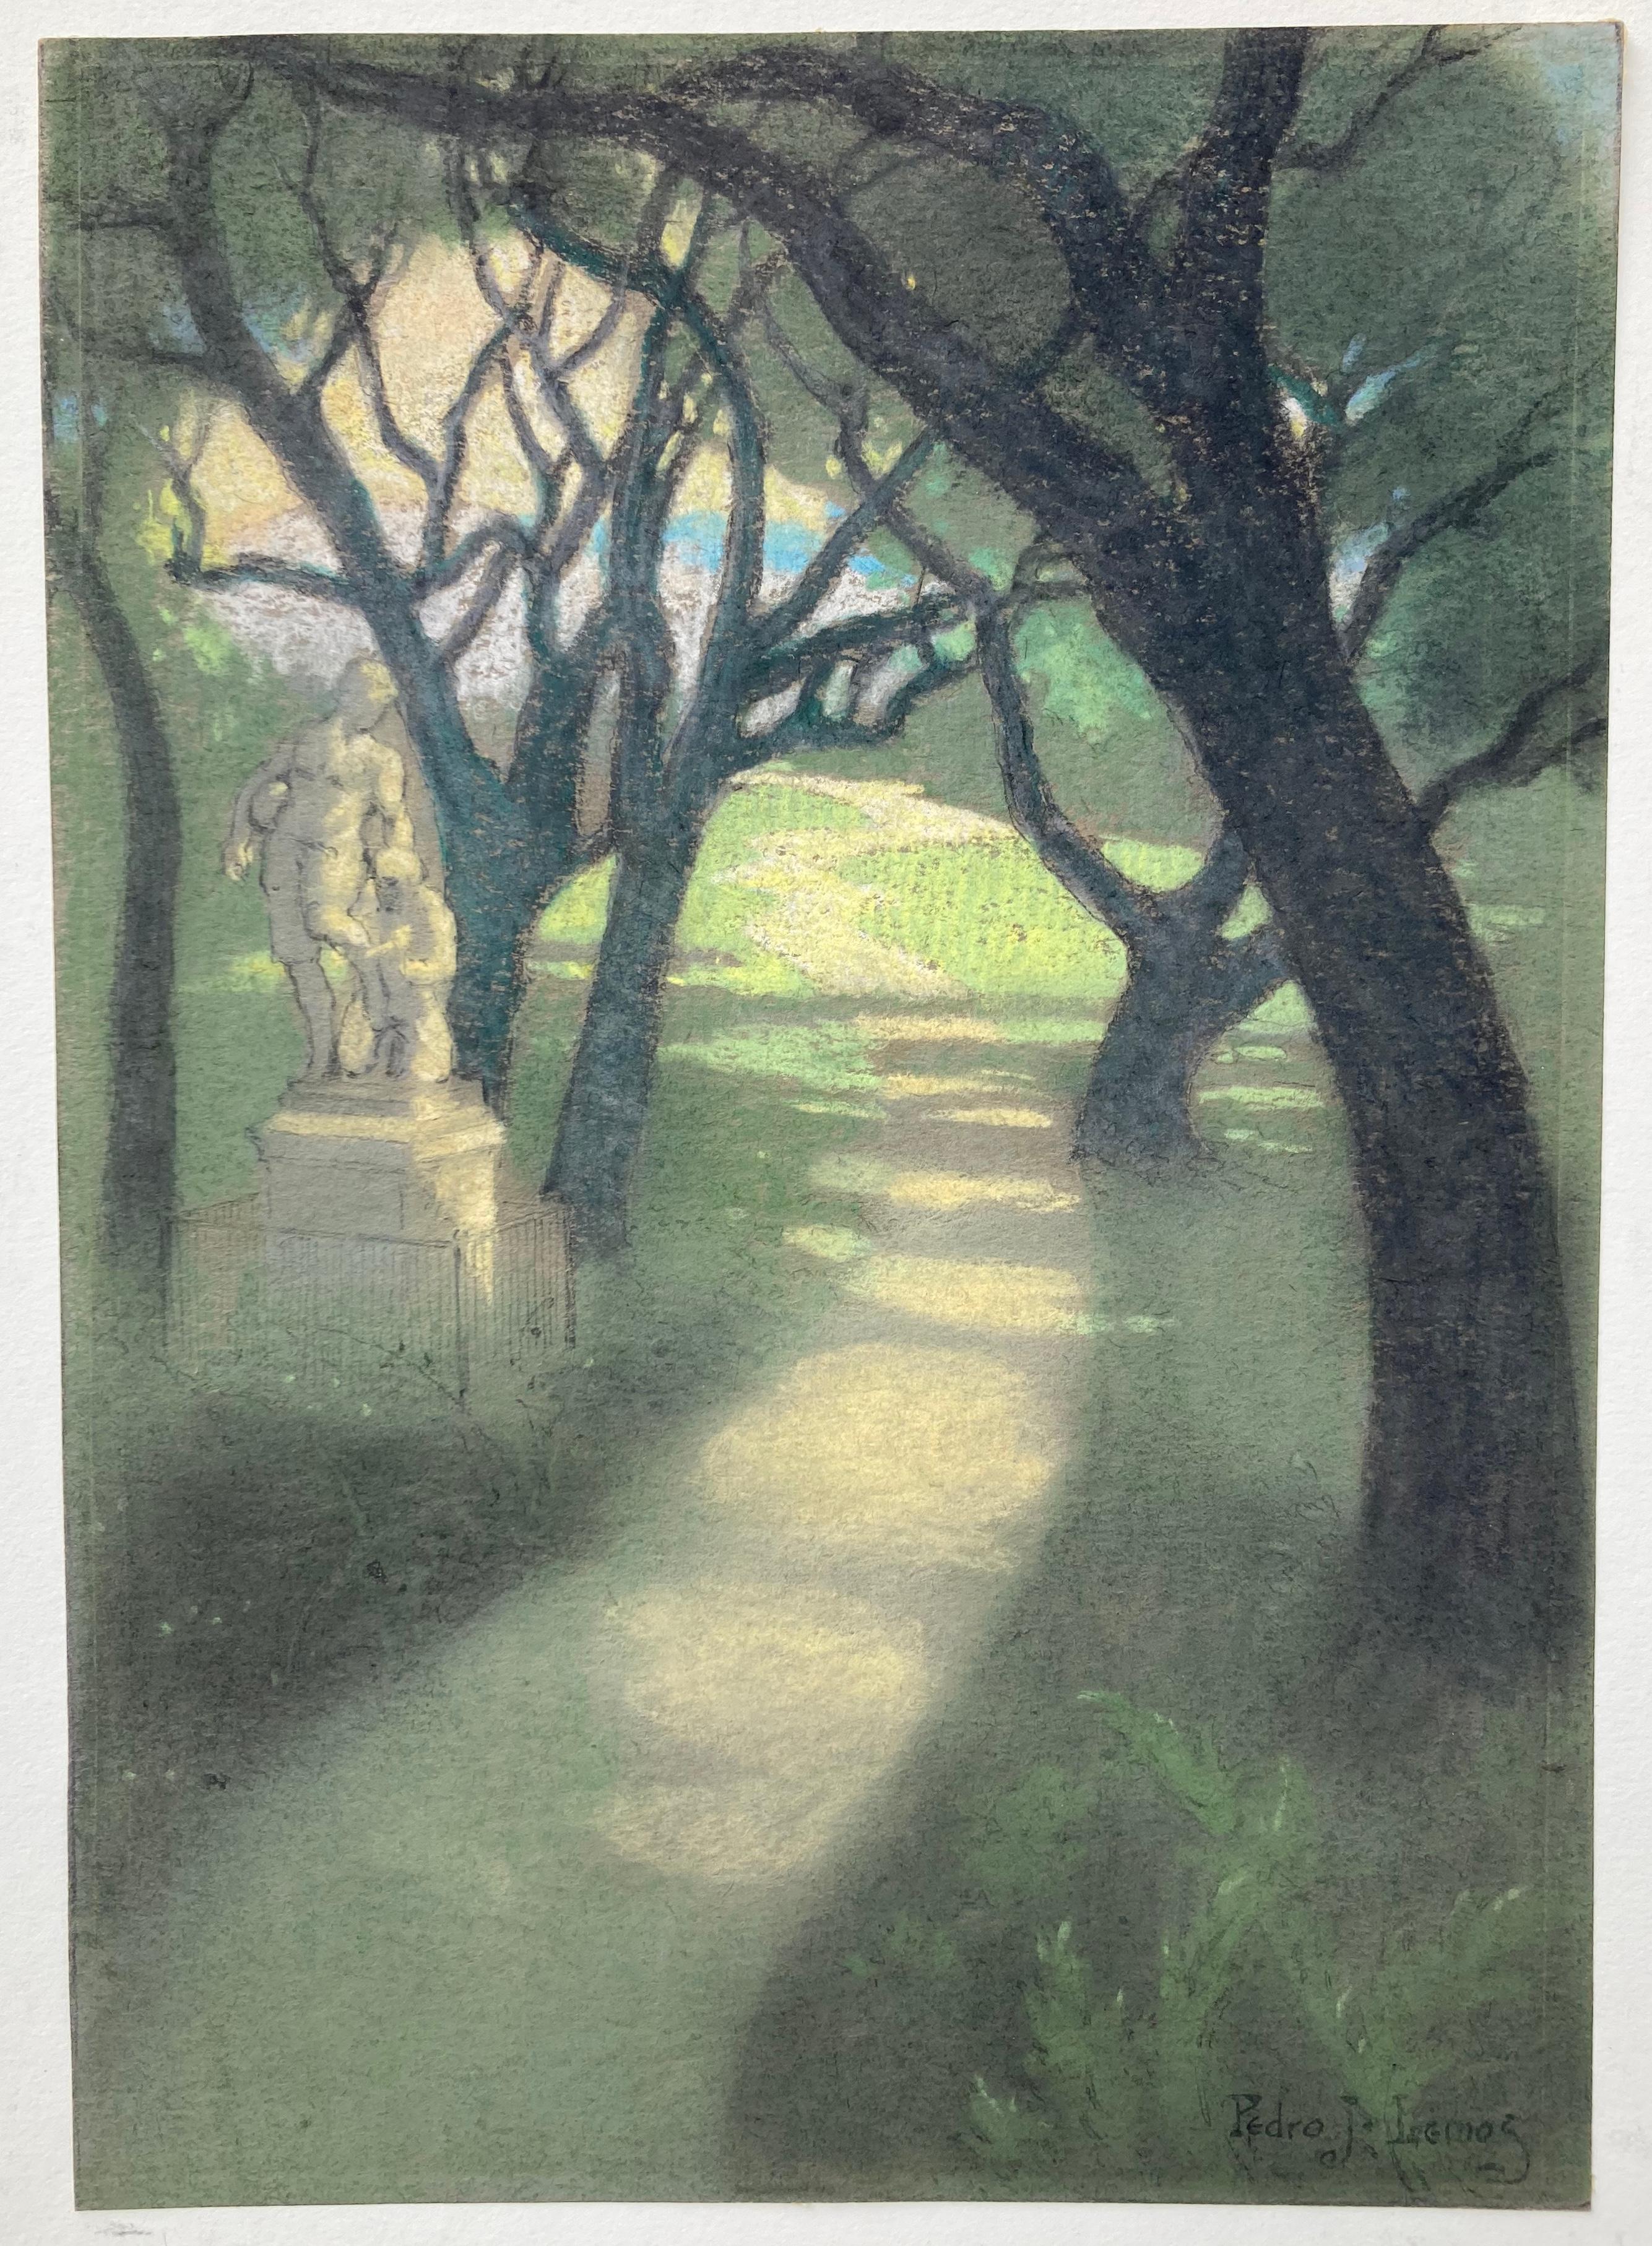 Pedro J. Lemos Landscape Art -  FOOTBALL STATUE THROUGH THE TREES - UC BERKELEY 1921 ORIGINAL YEARBOOK PASTEL